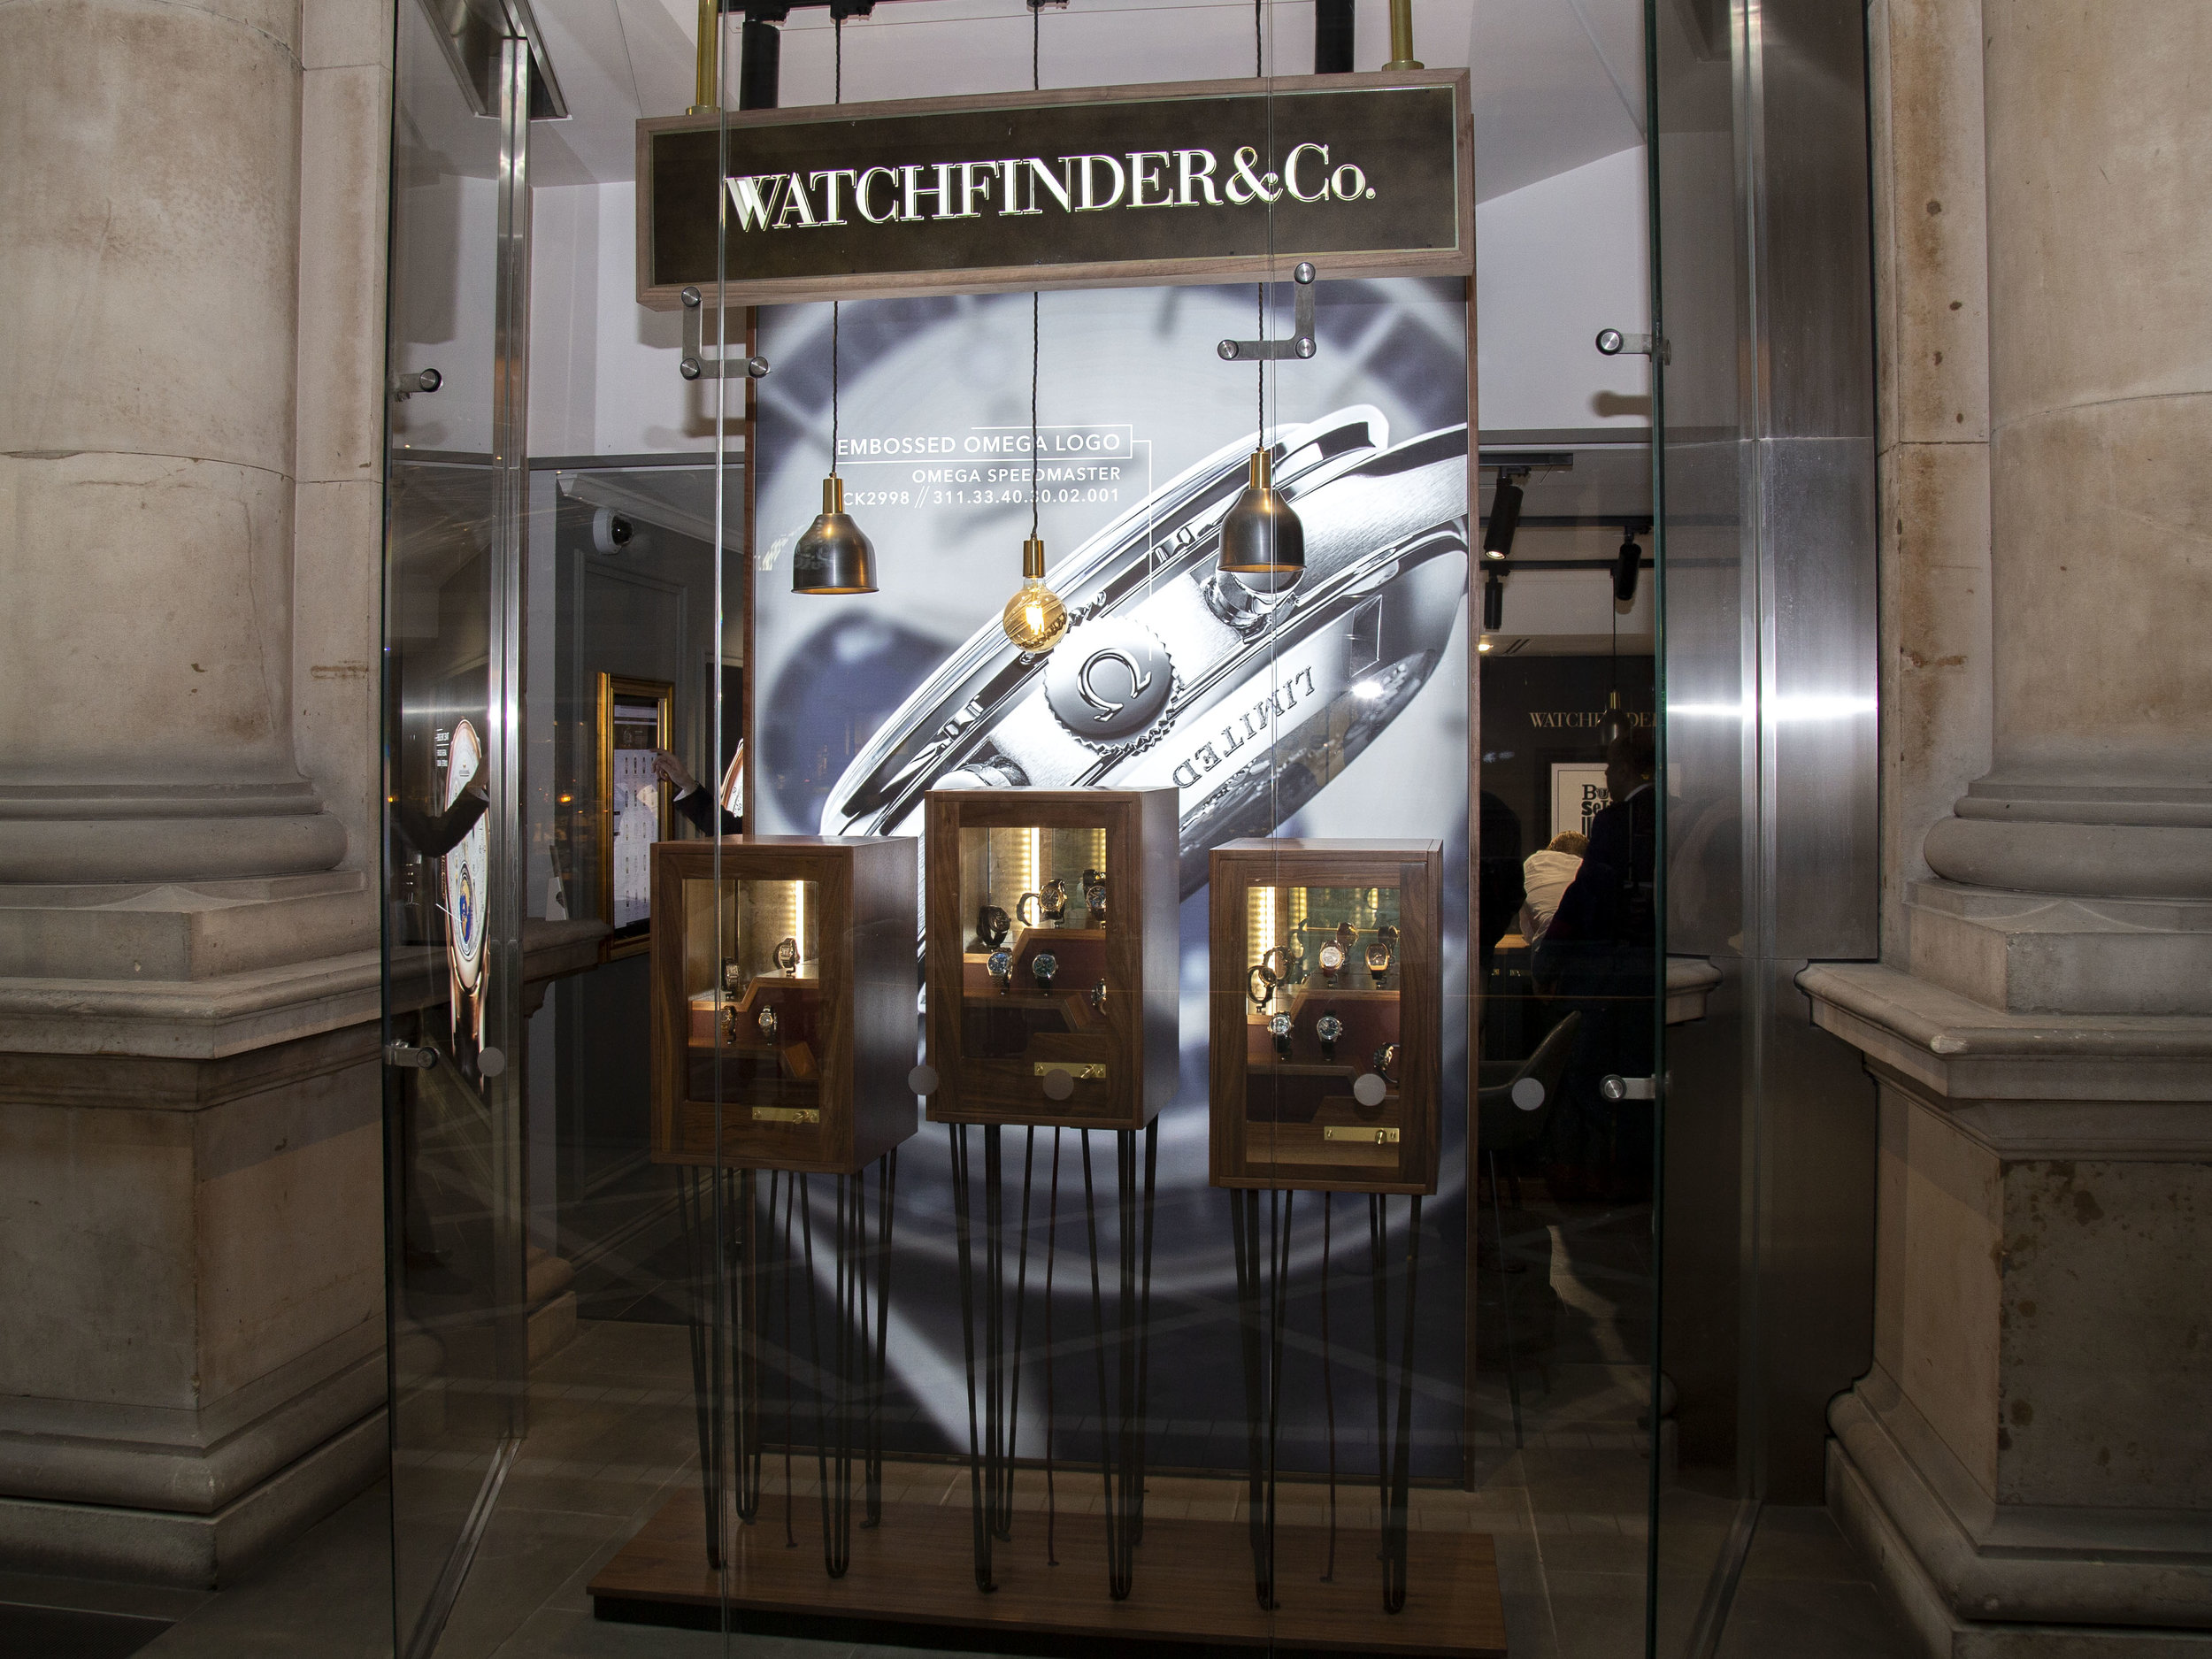 Watchfinder Royal Exchange — The 